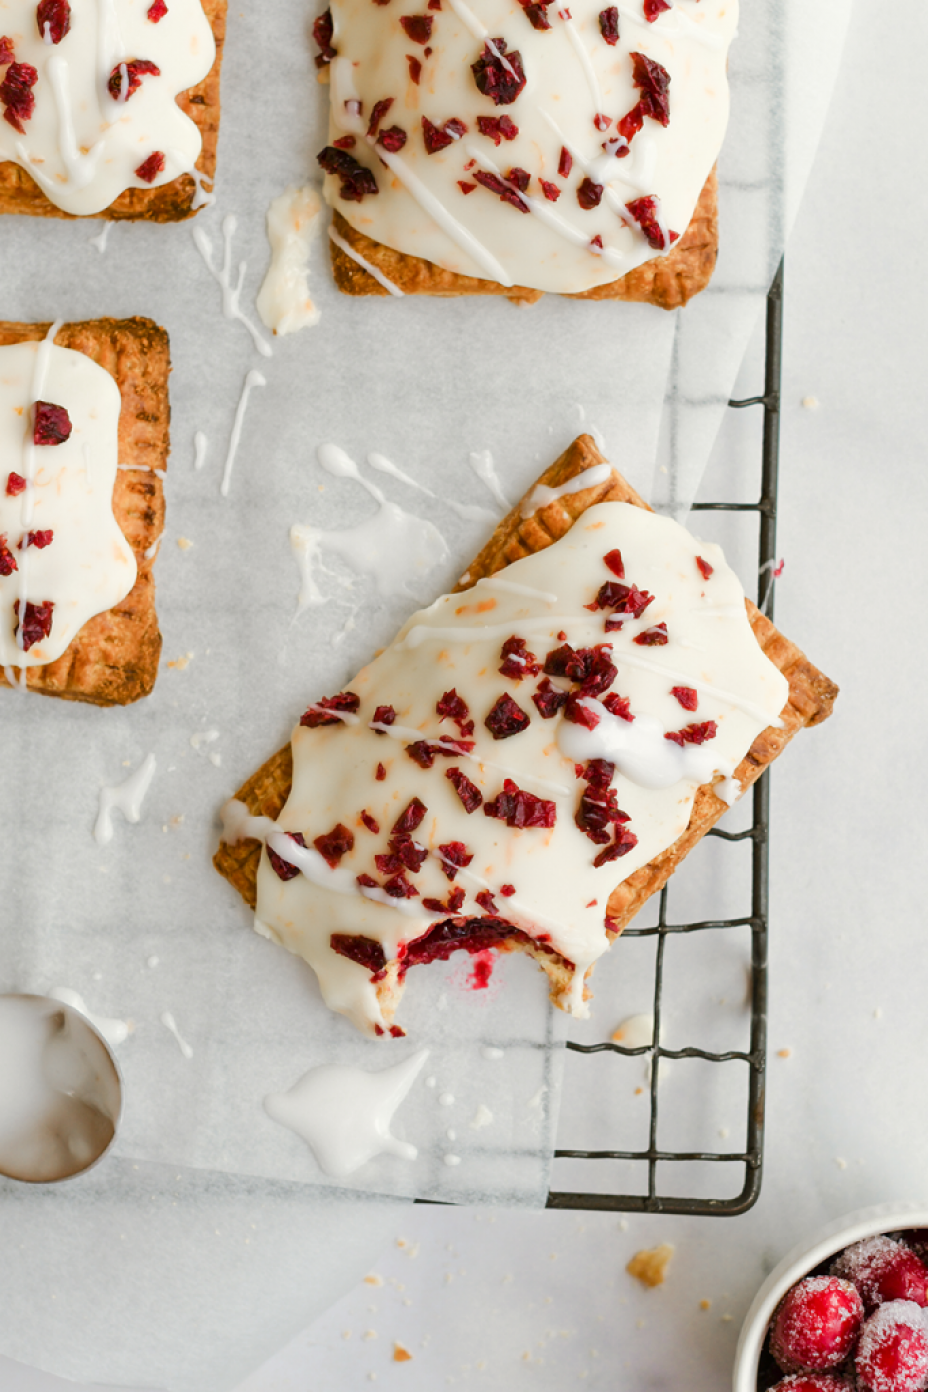 Cranberry pop tarts; a festive breakfast treat